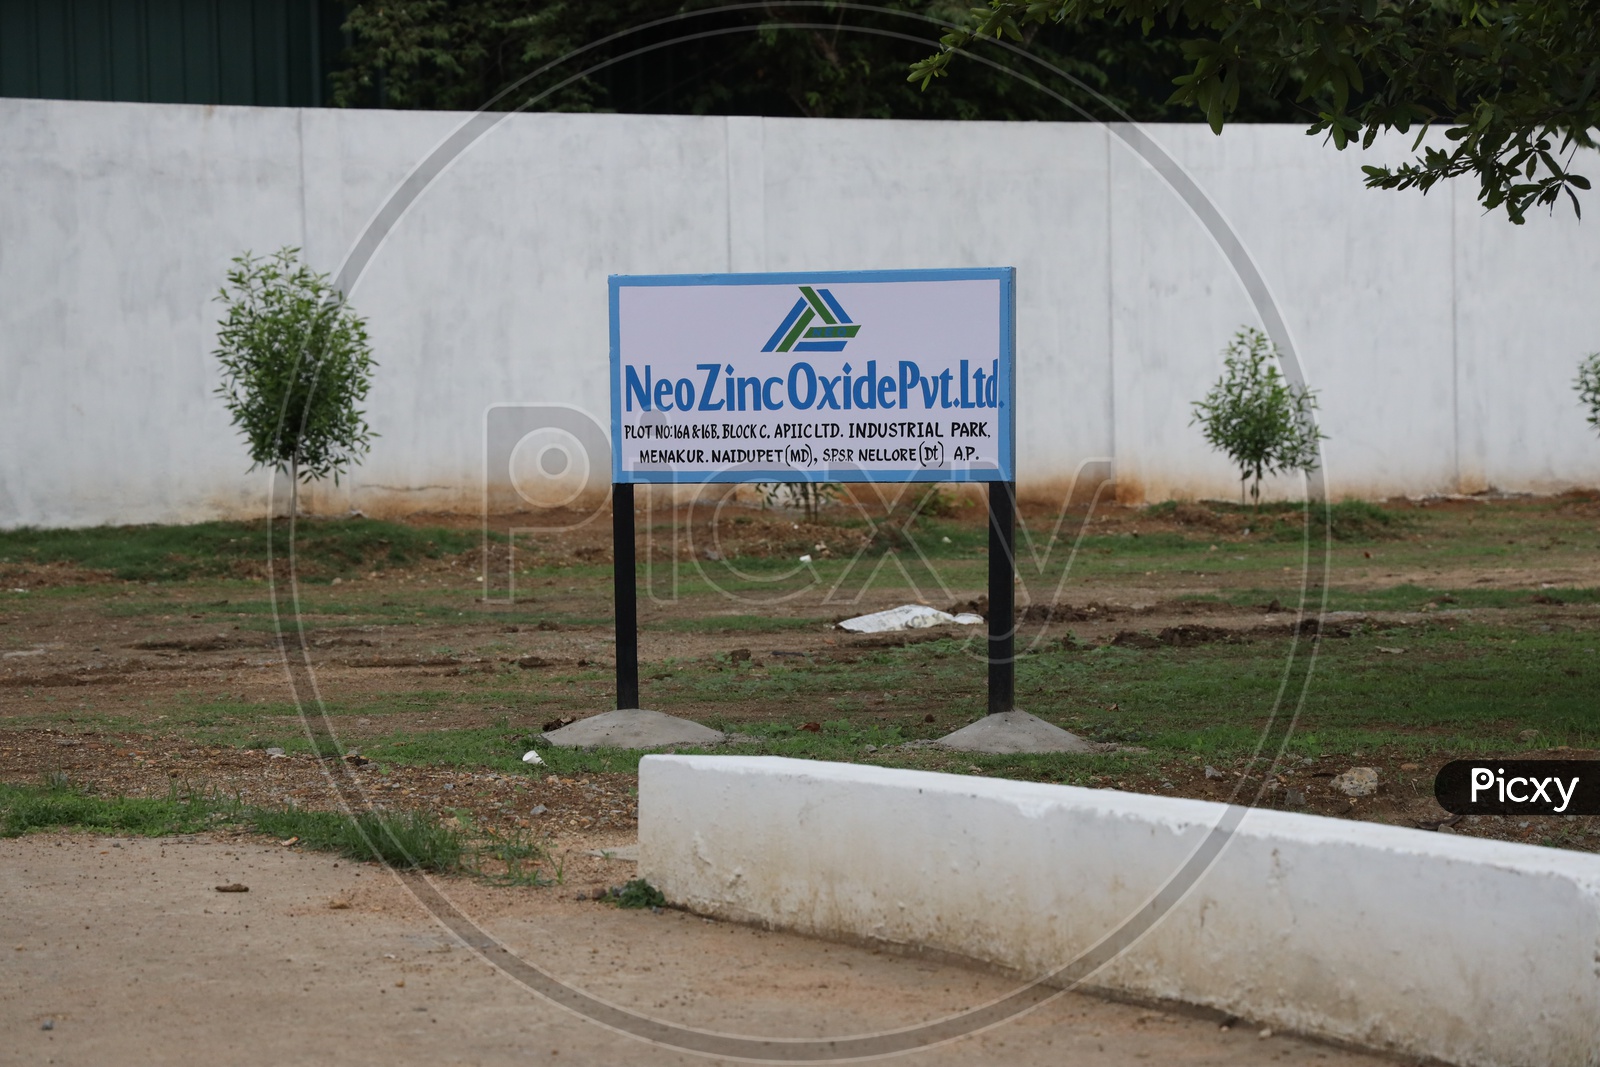 Neo Zinc Oxide Pvt Ltd